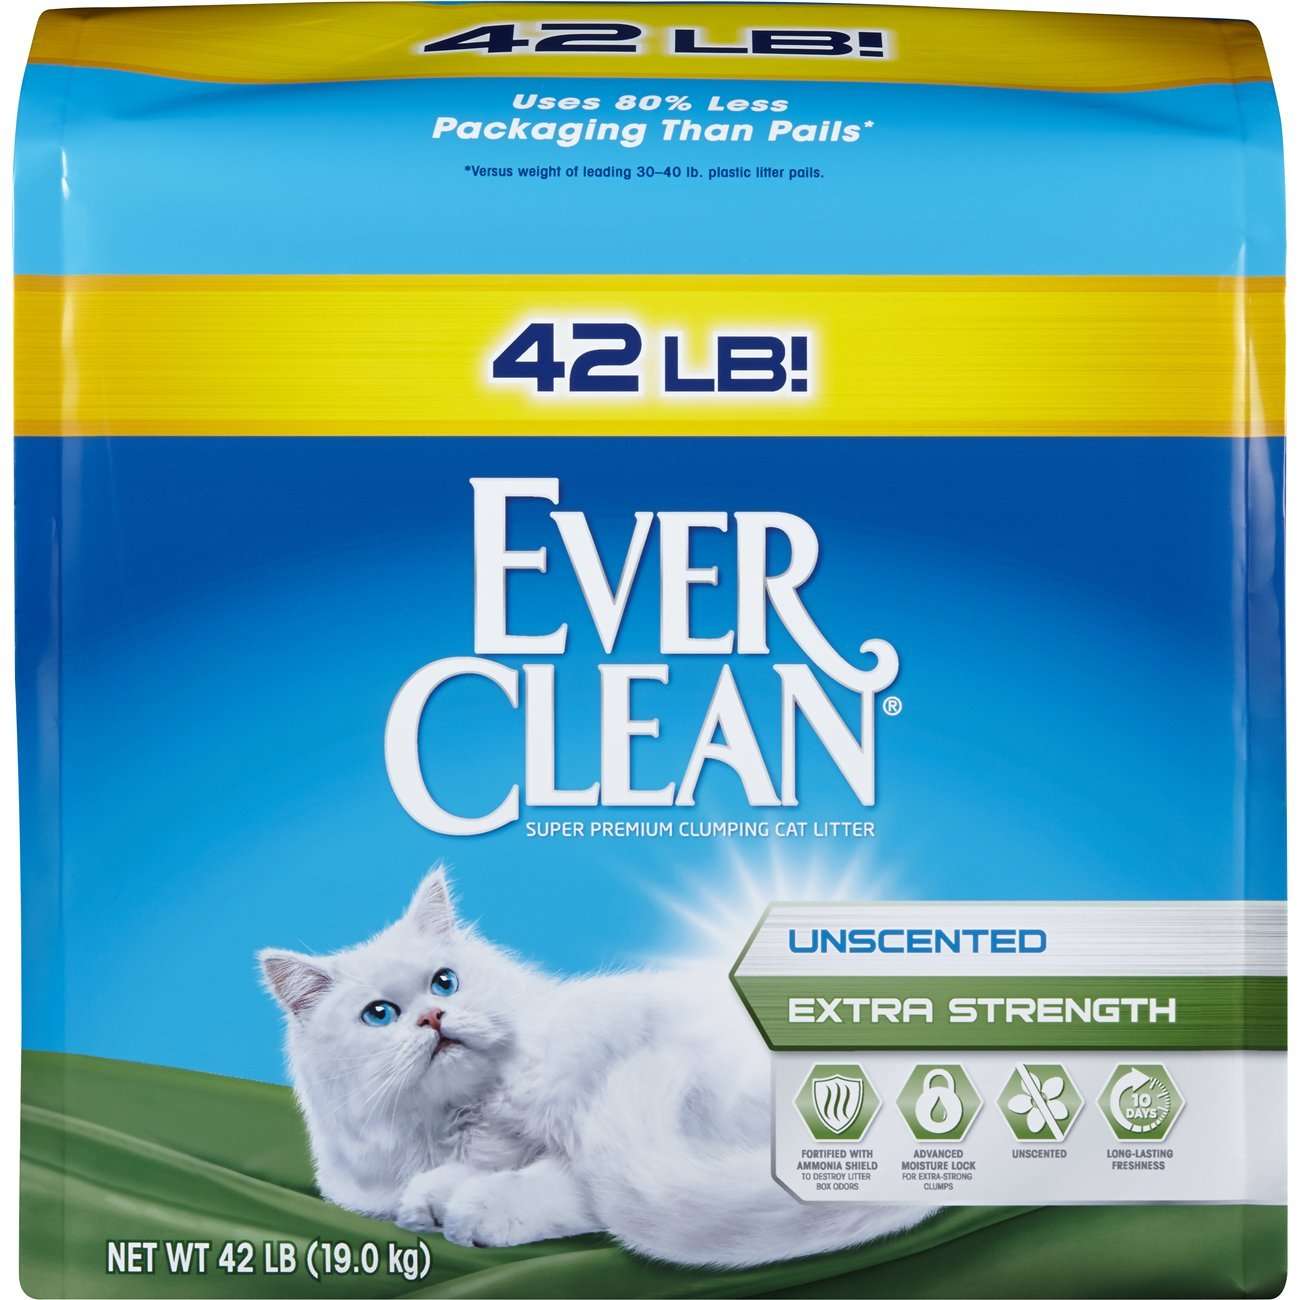 Best Cat Litter For Odor Control 2020: A Well